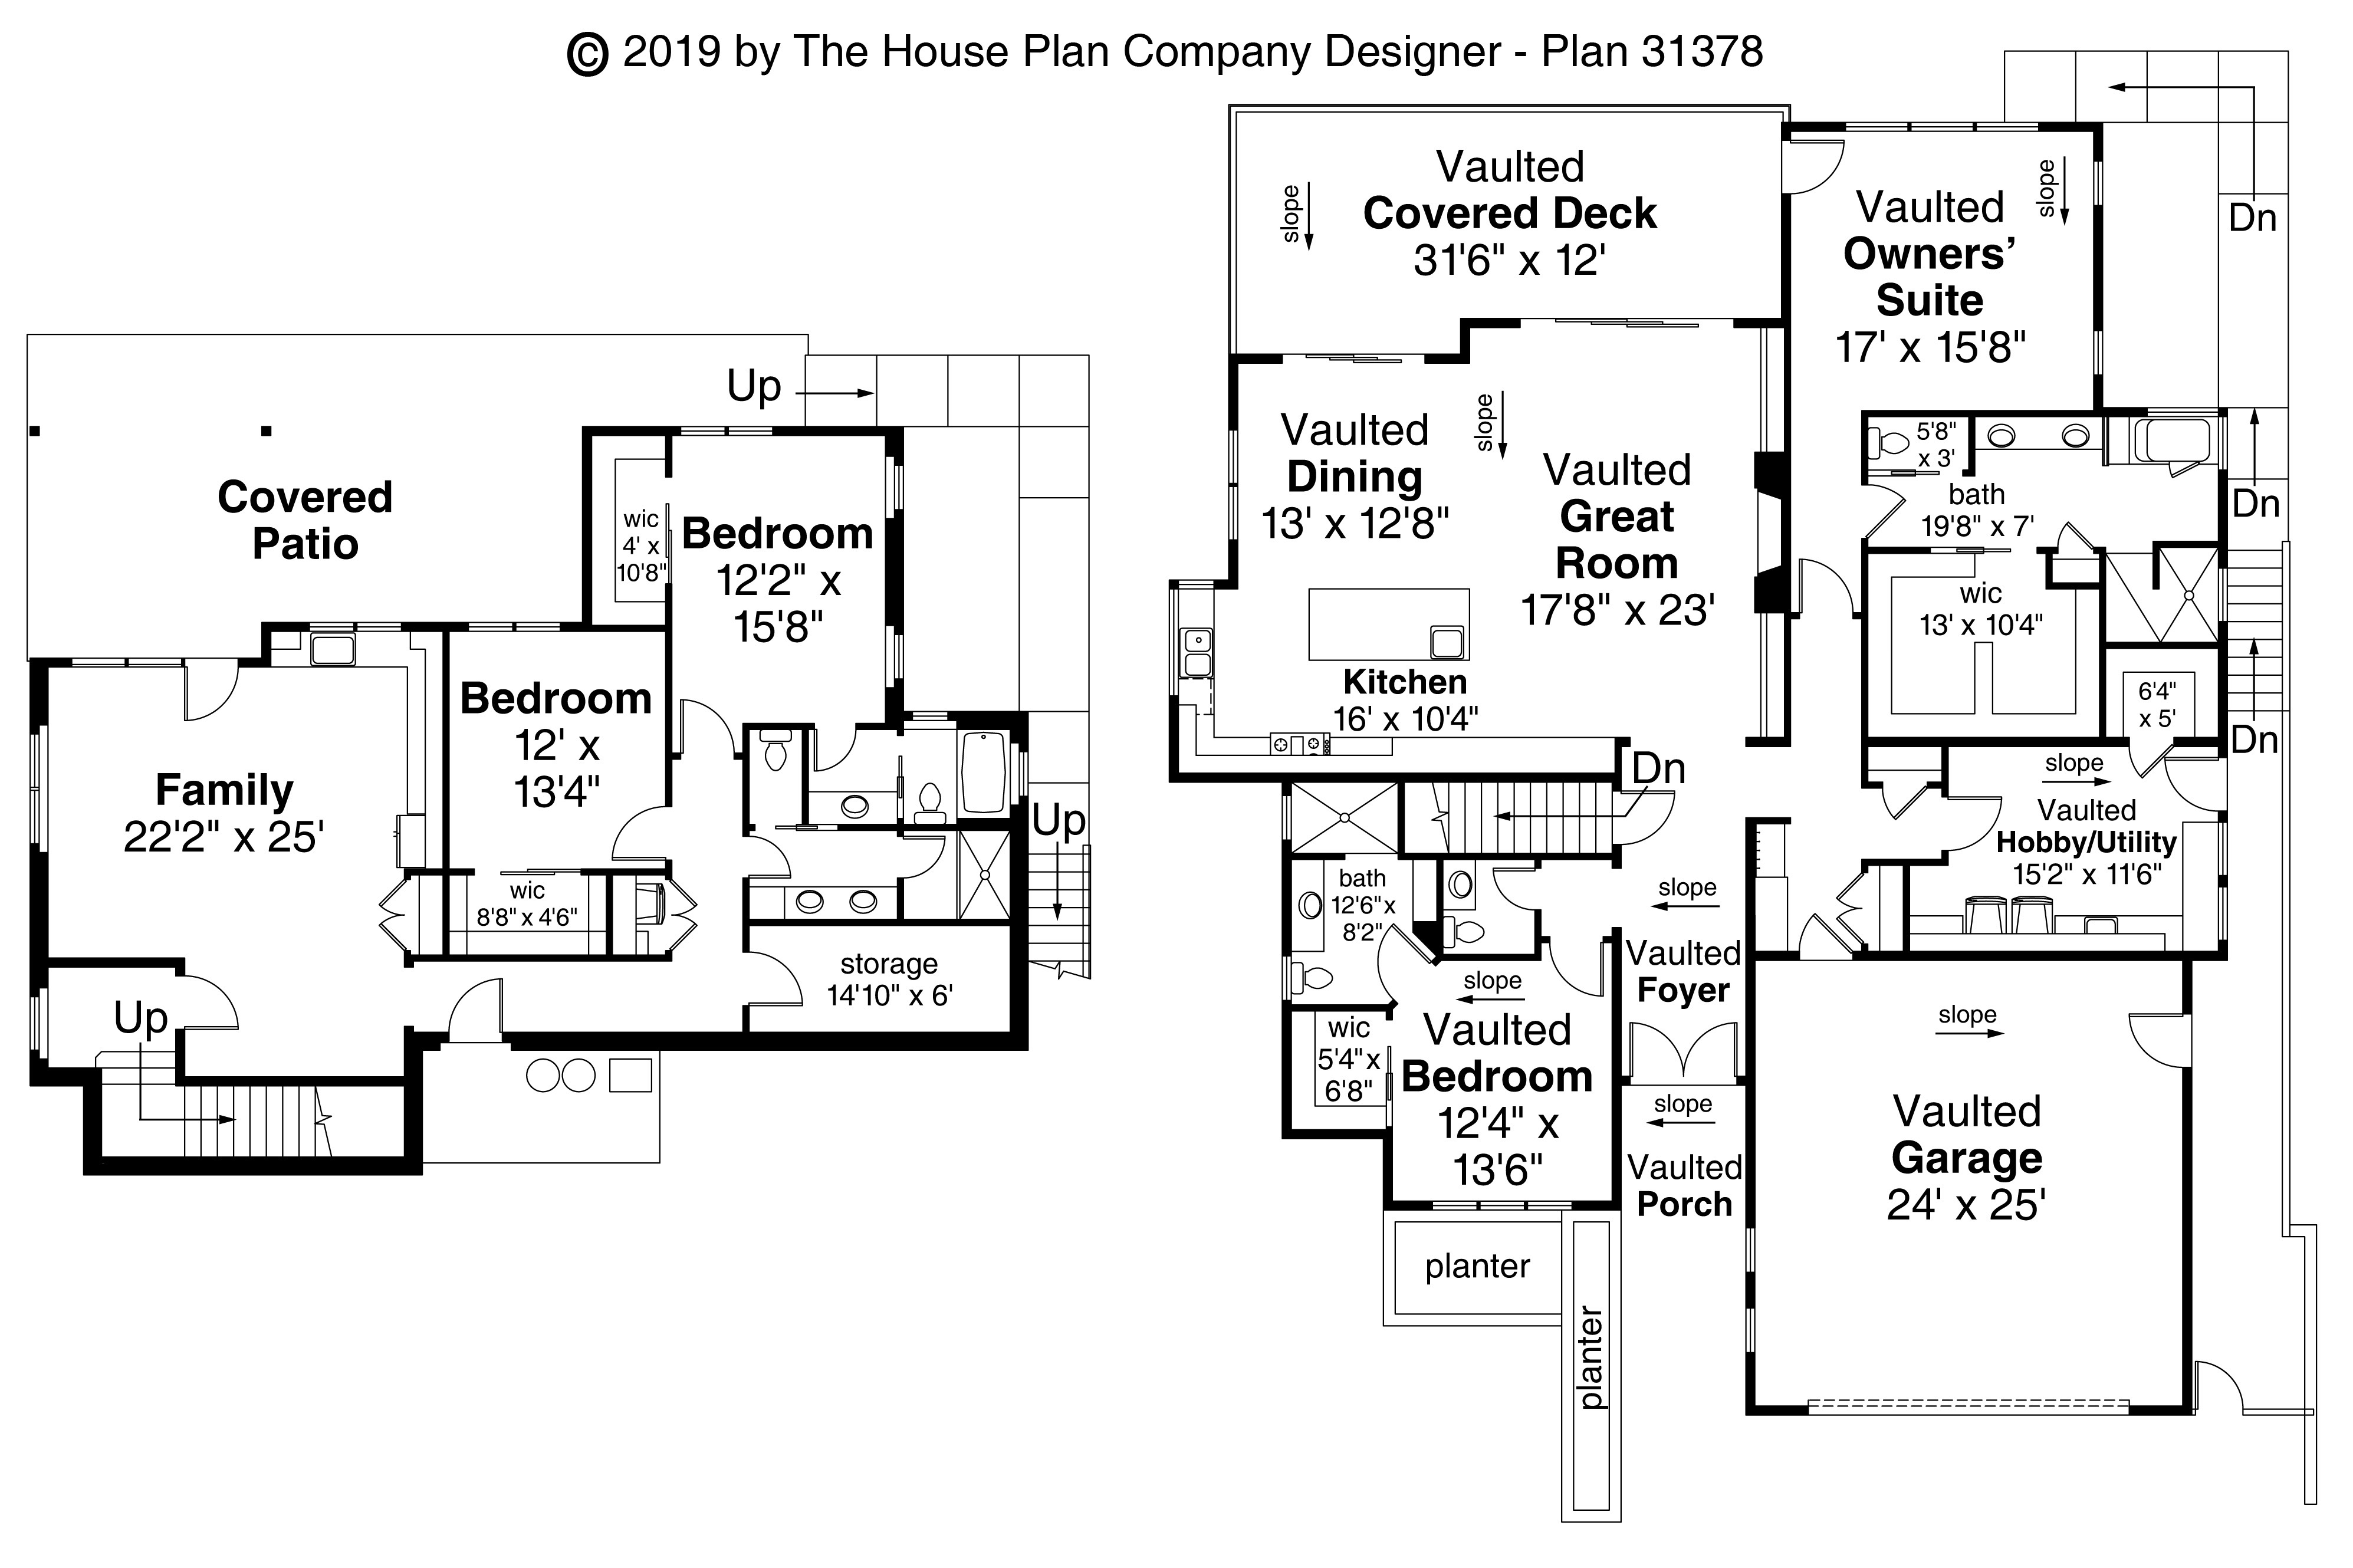 Modern Mountain House Design - Step One Stock - House Plans